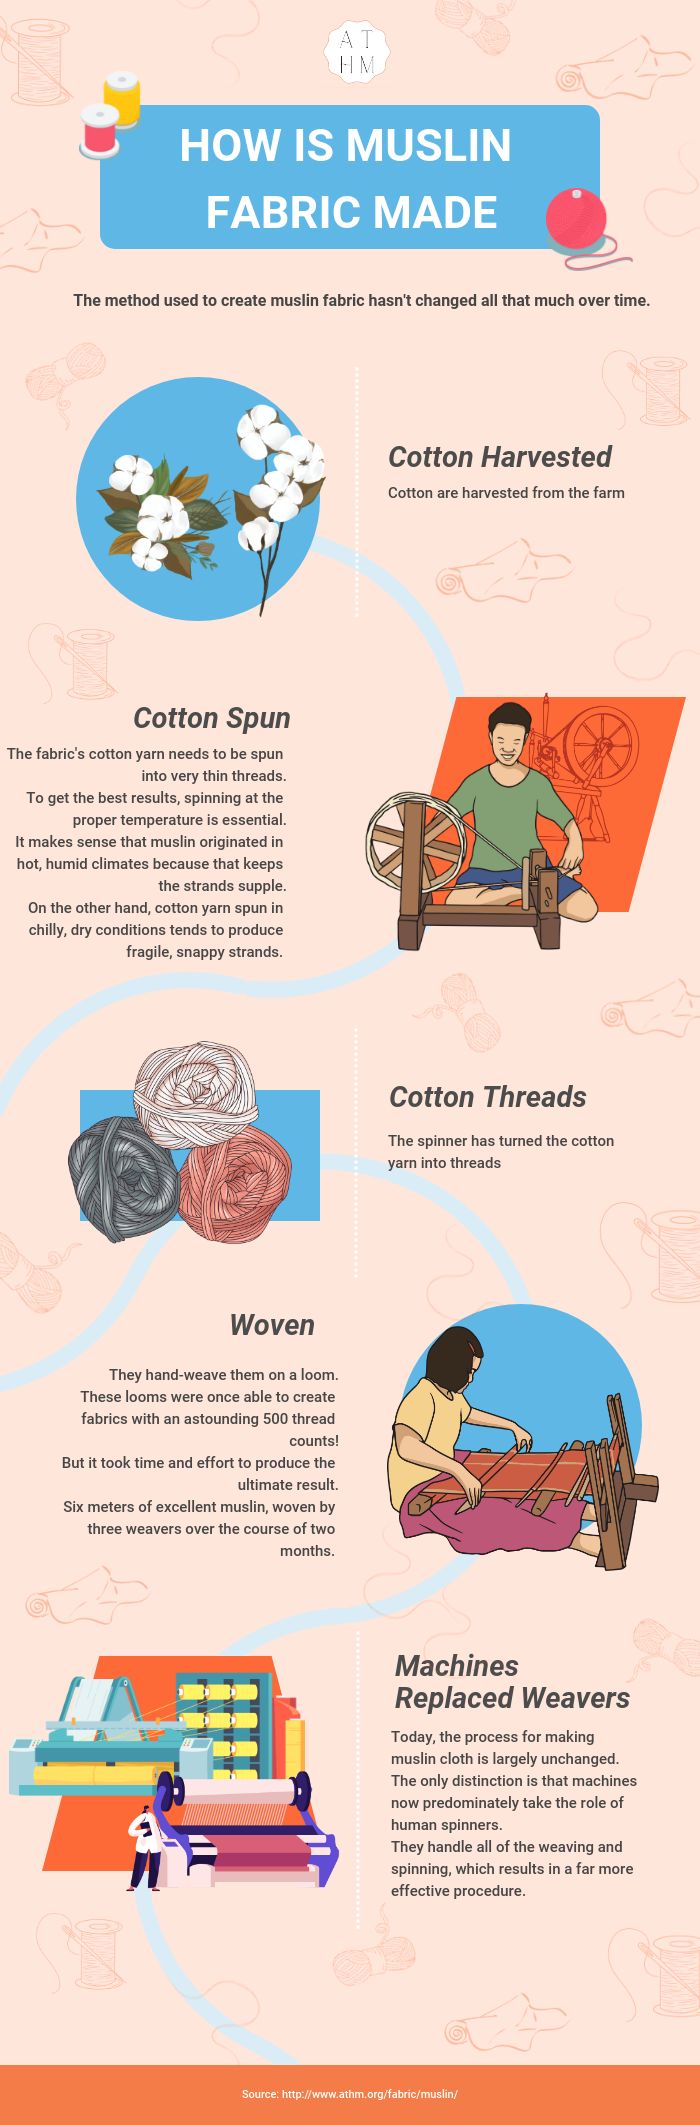 Muslin Fabric - History, Uses & Benefits